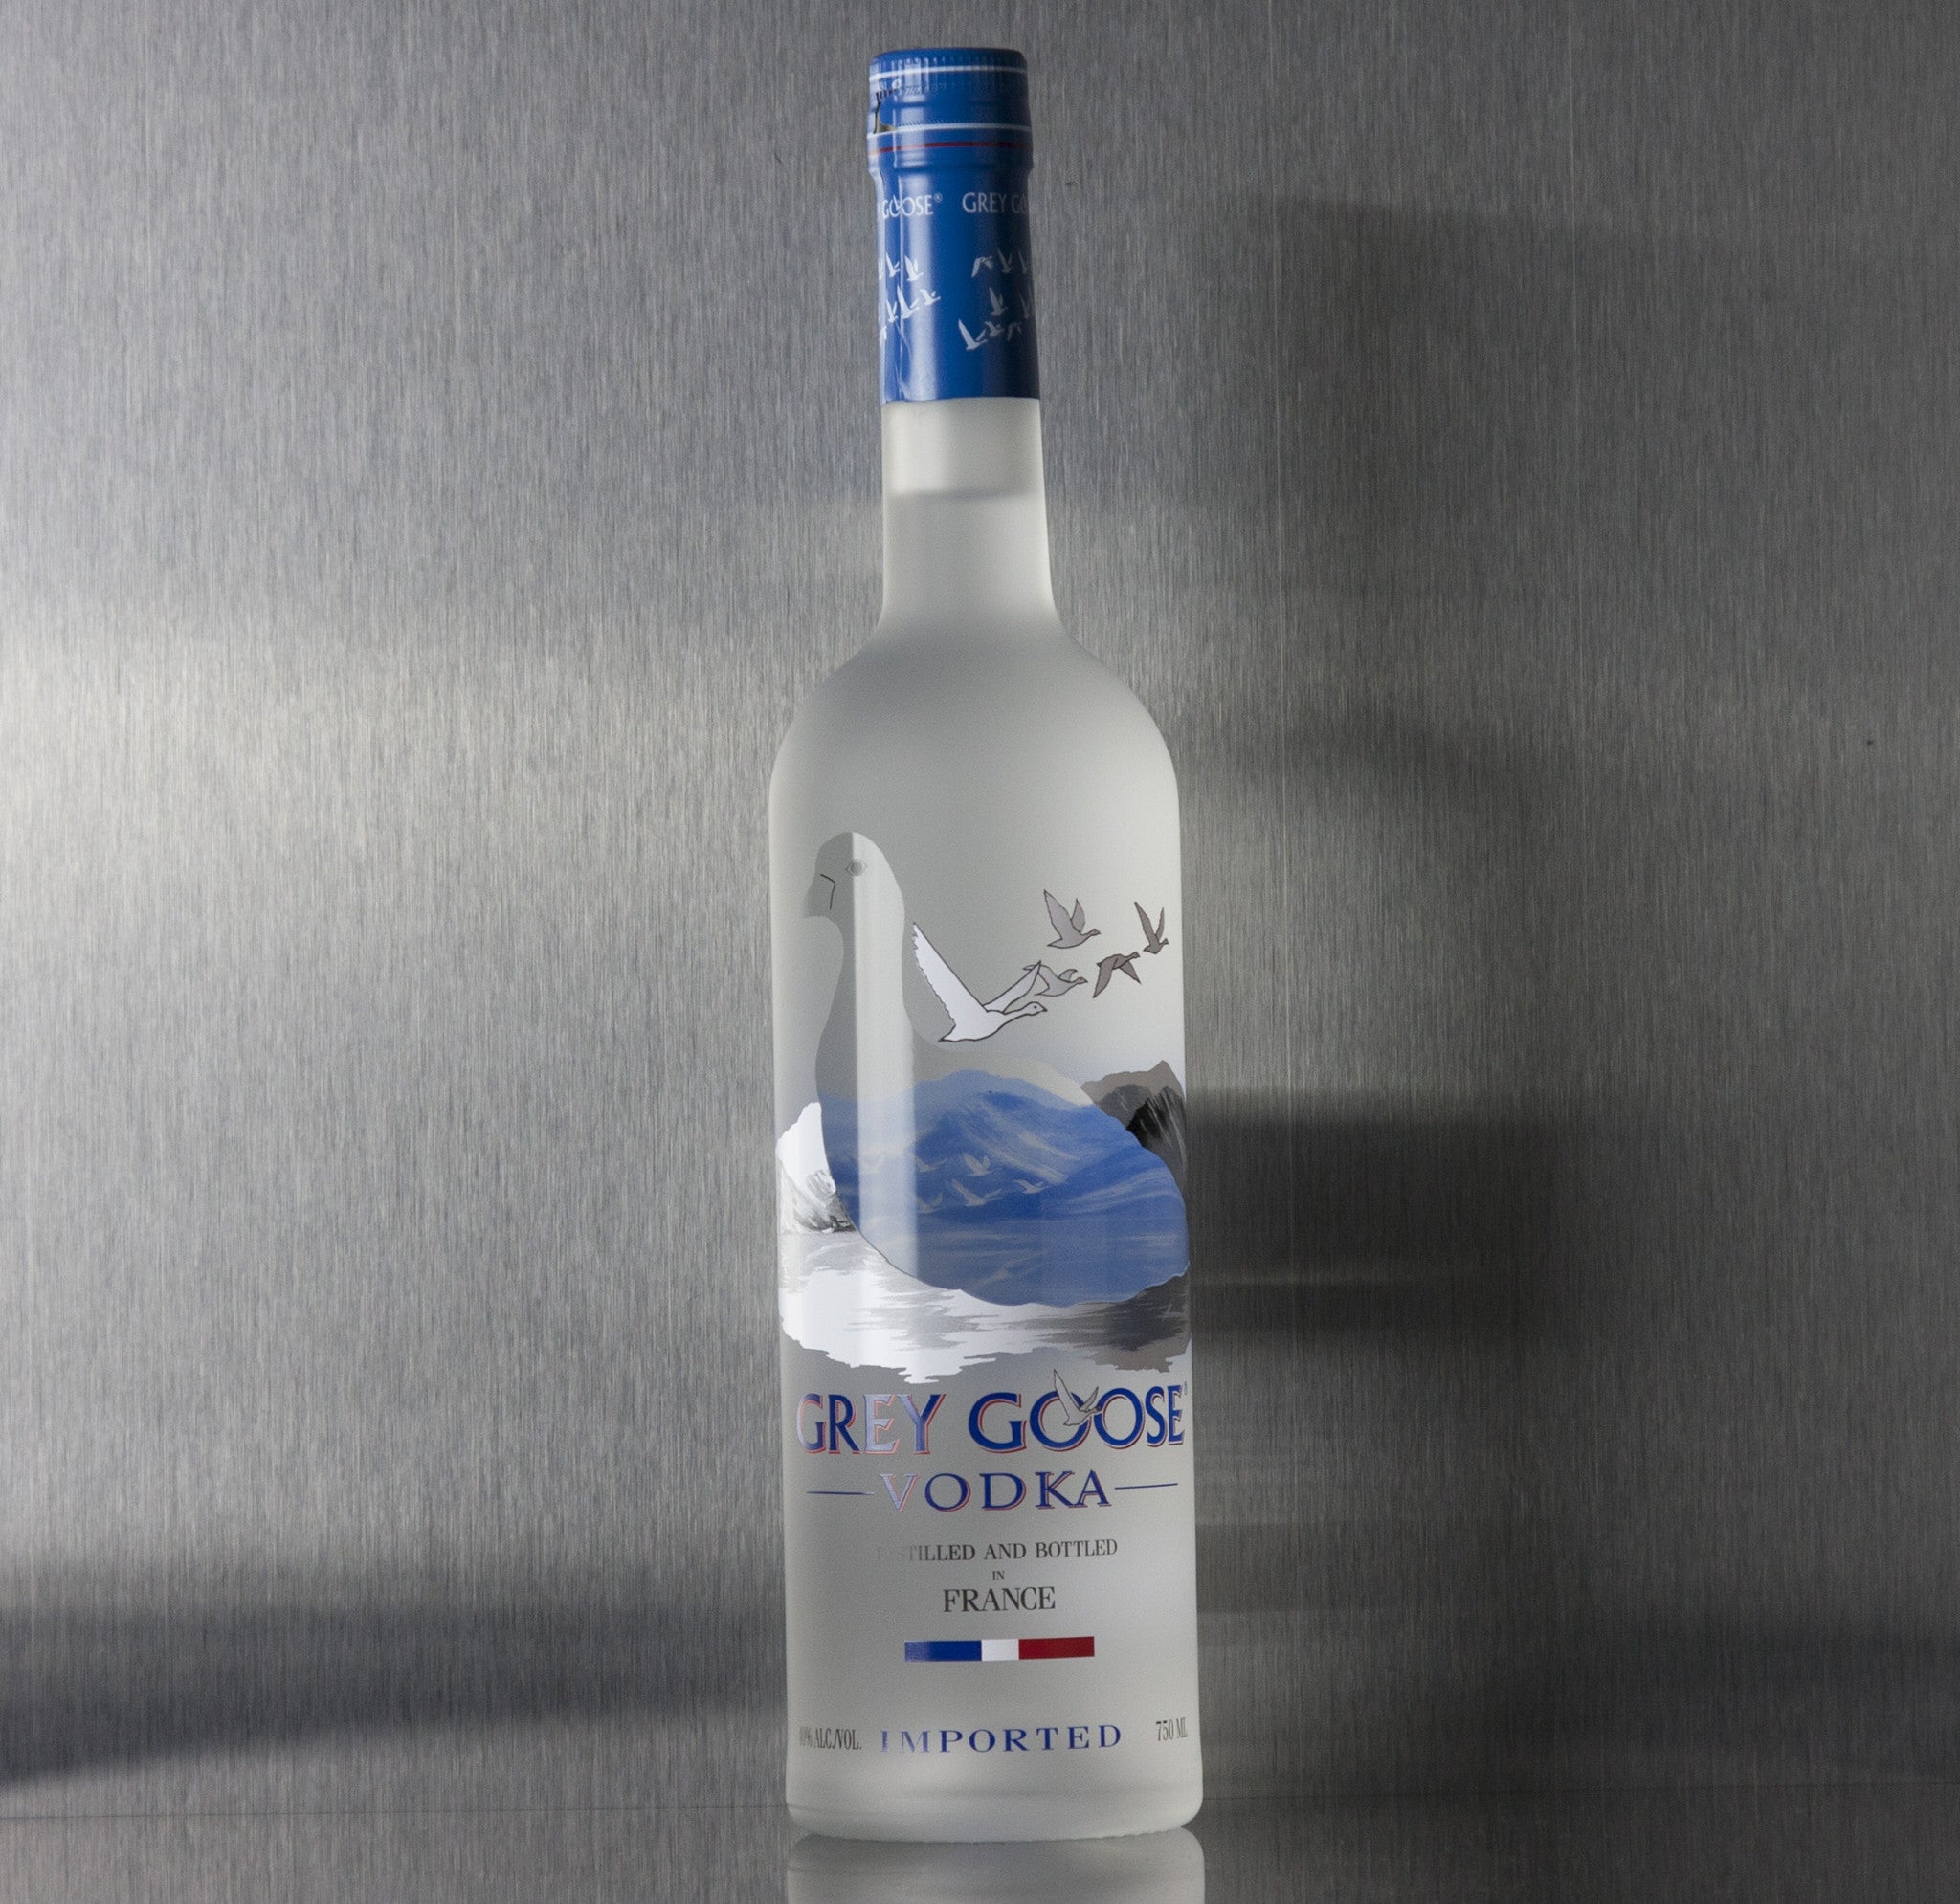 Grey Goose Vodka 750 ml